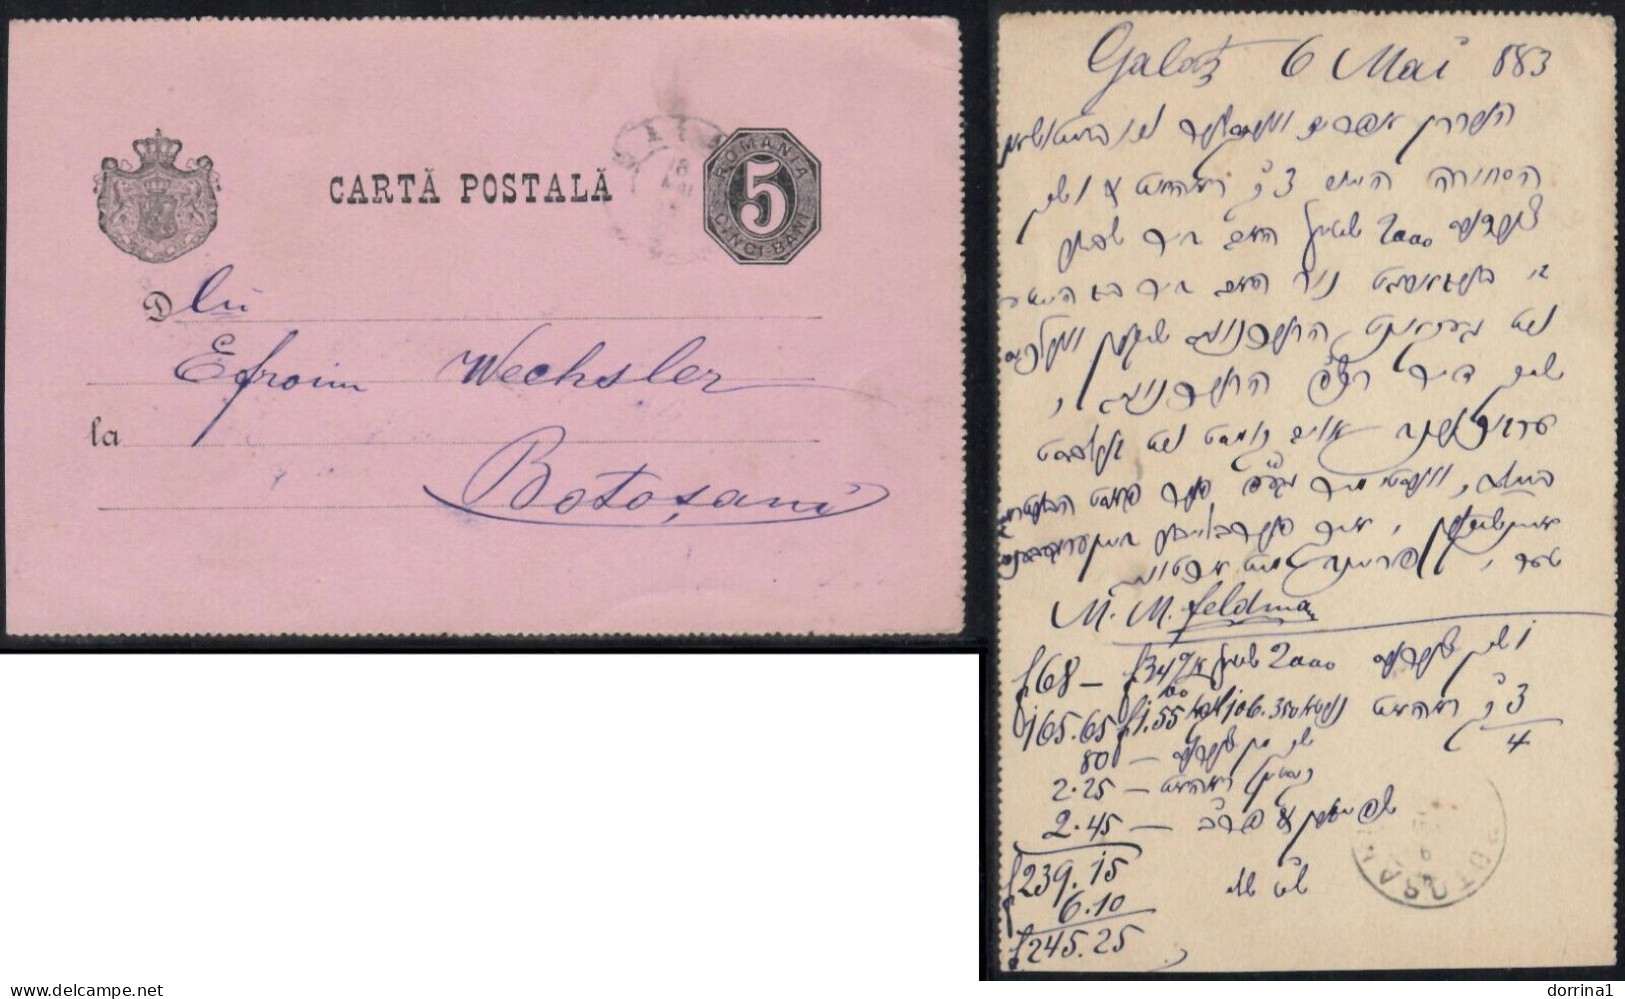 Old Hebrew Stationery Postcard Romania Galați 1883 Jewish Judaica Judaika - To Efraim Weeksler - Jewish